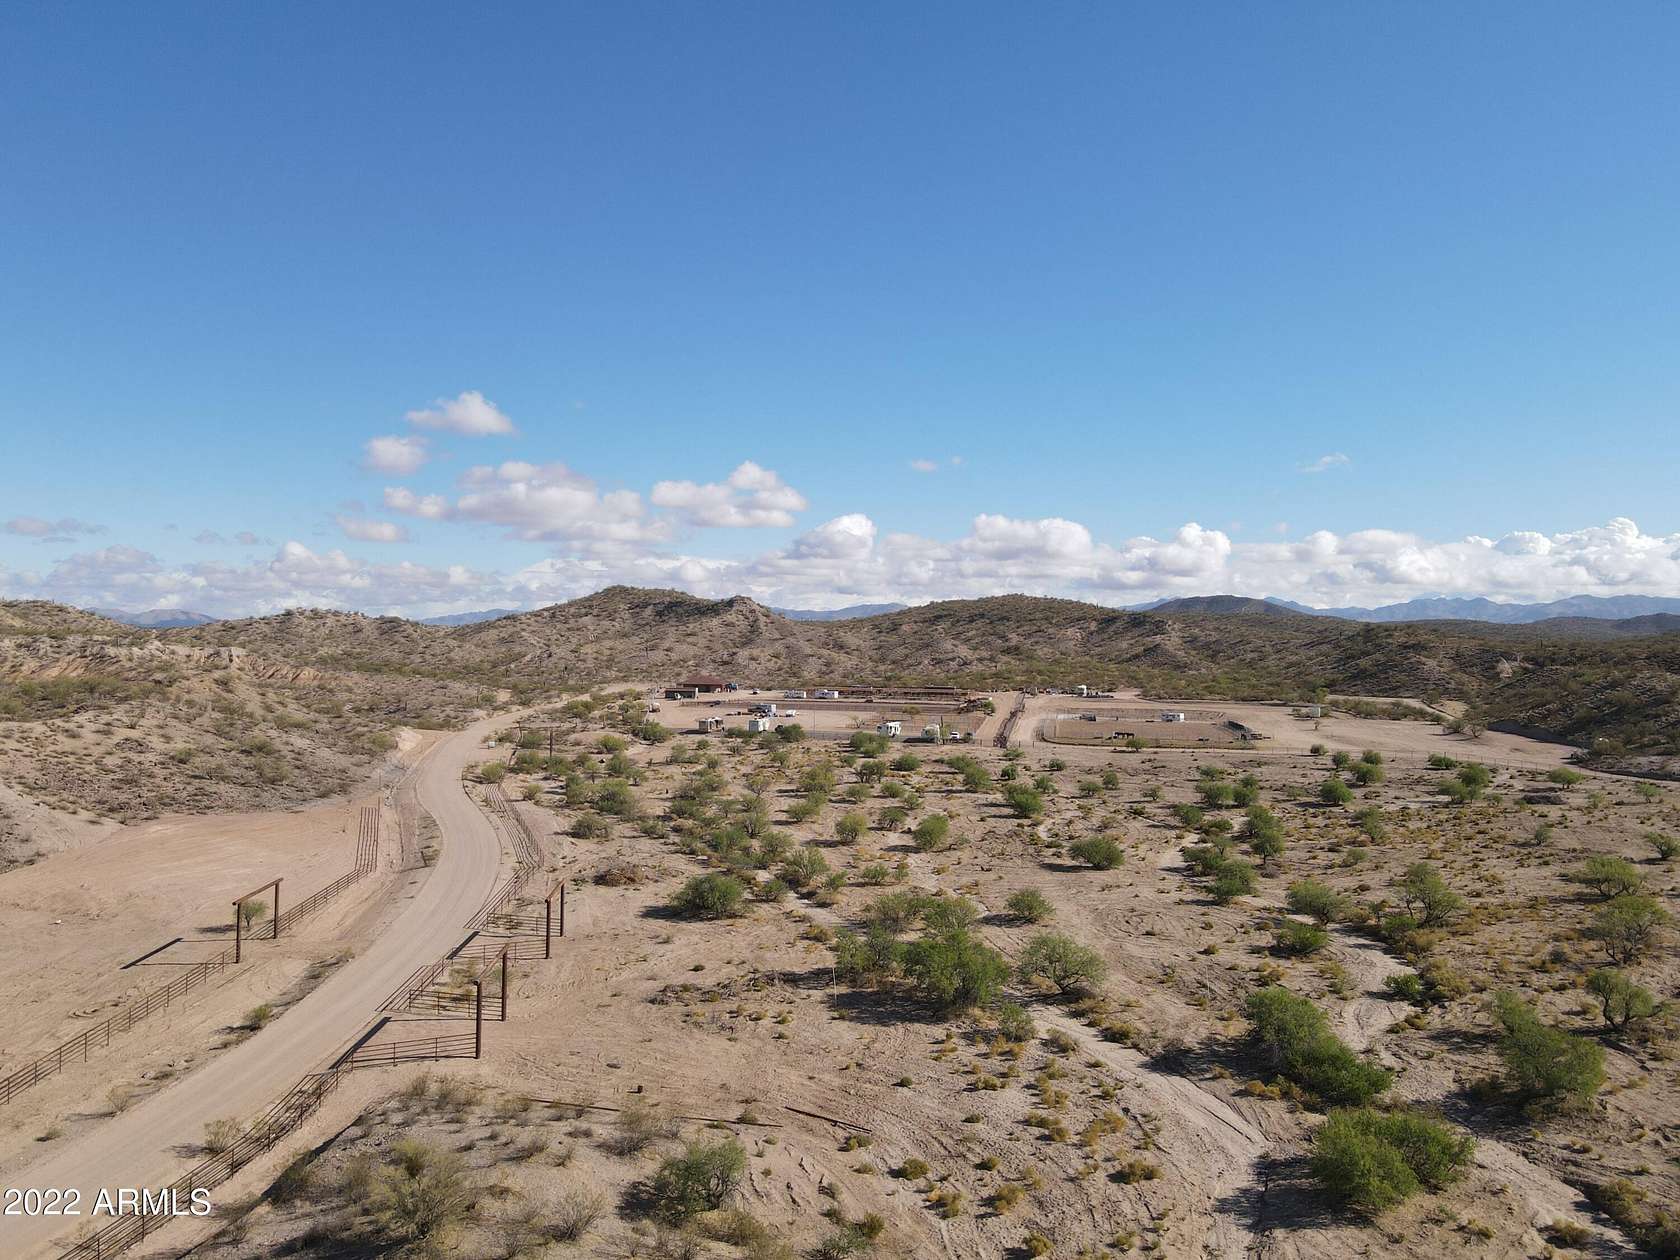 46 Acres of Land for Sale in Wickenburg, Arizona